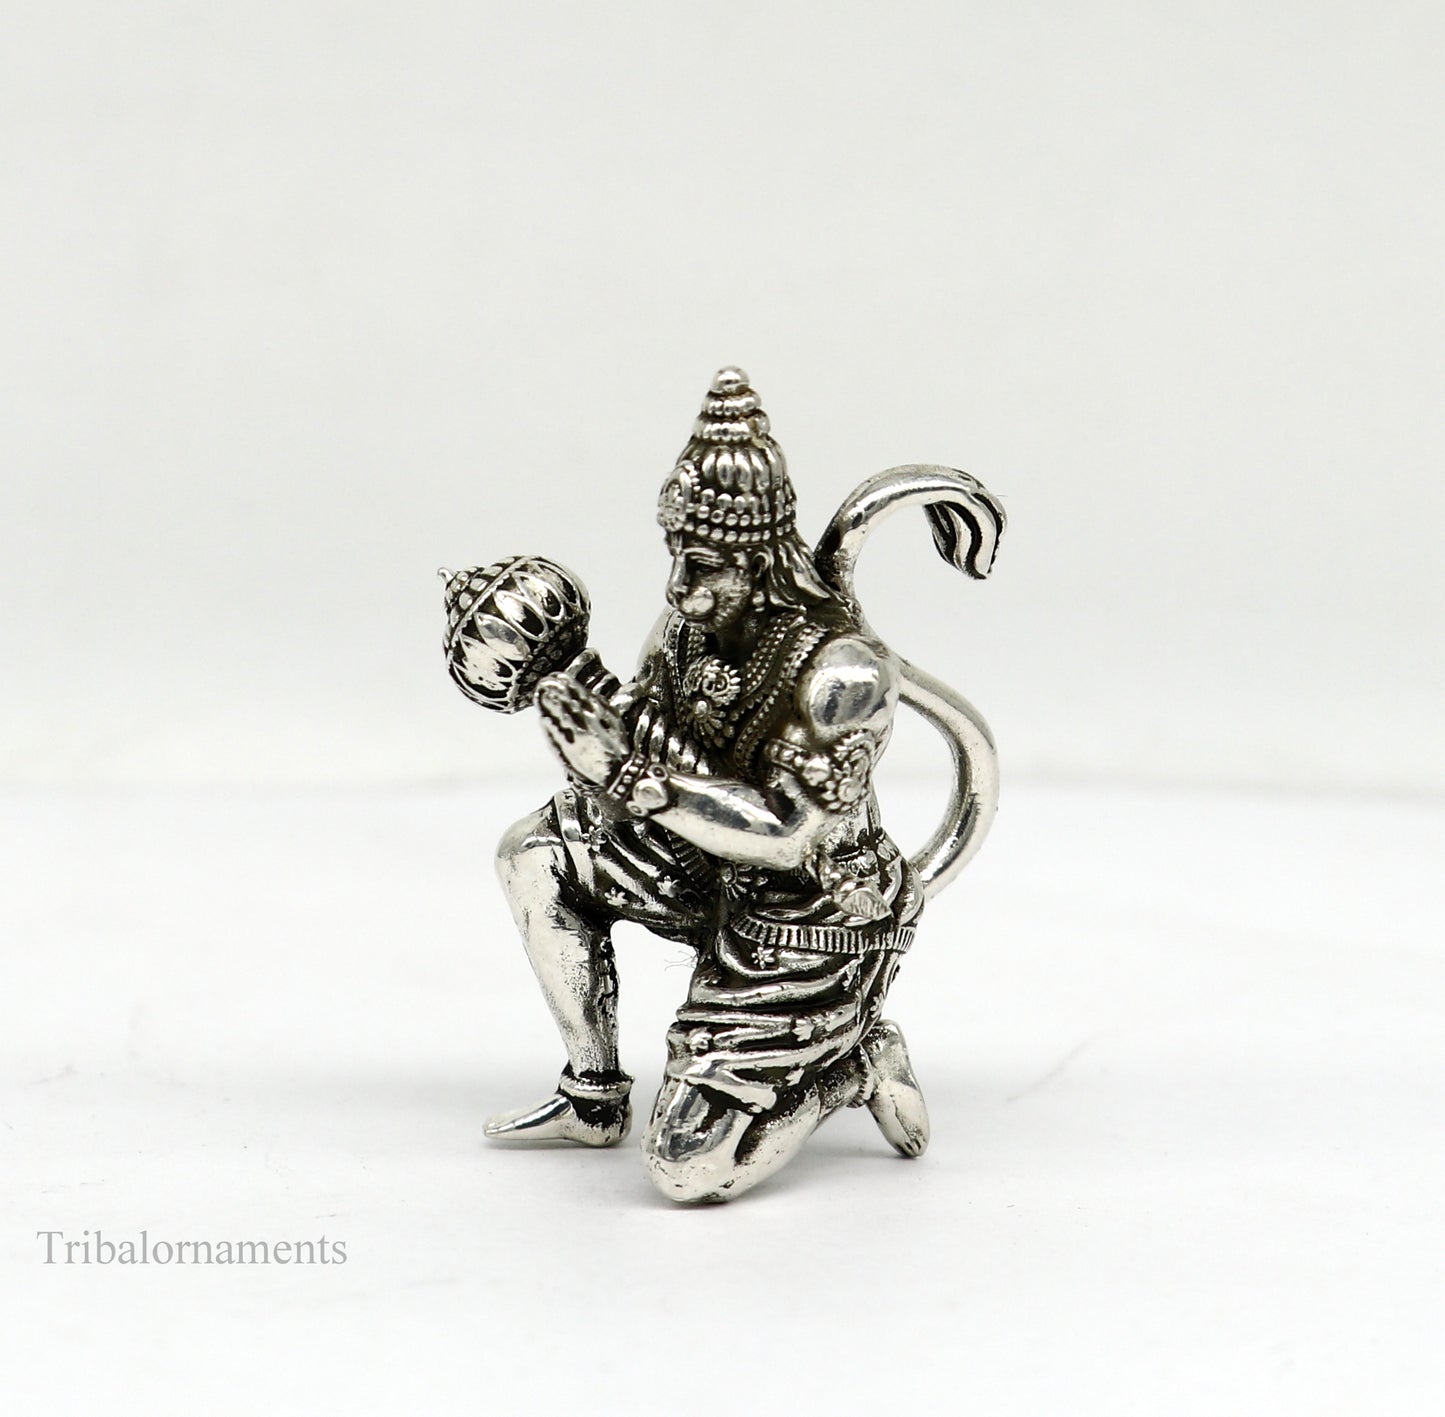 925 silver handmade Lord hanuman 1.5" statue, best puja or gifting god hanuman statue sculpture home temple puja art, utensils art124 - TRIBAL ORNAMENTS